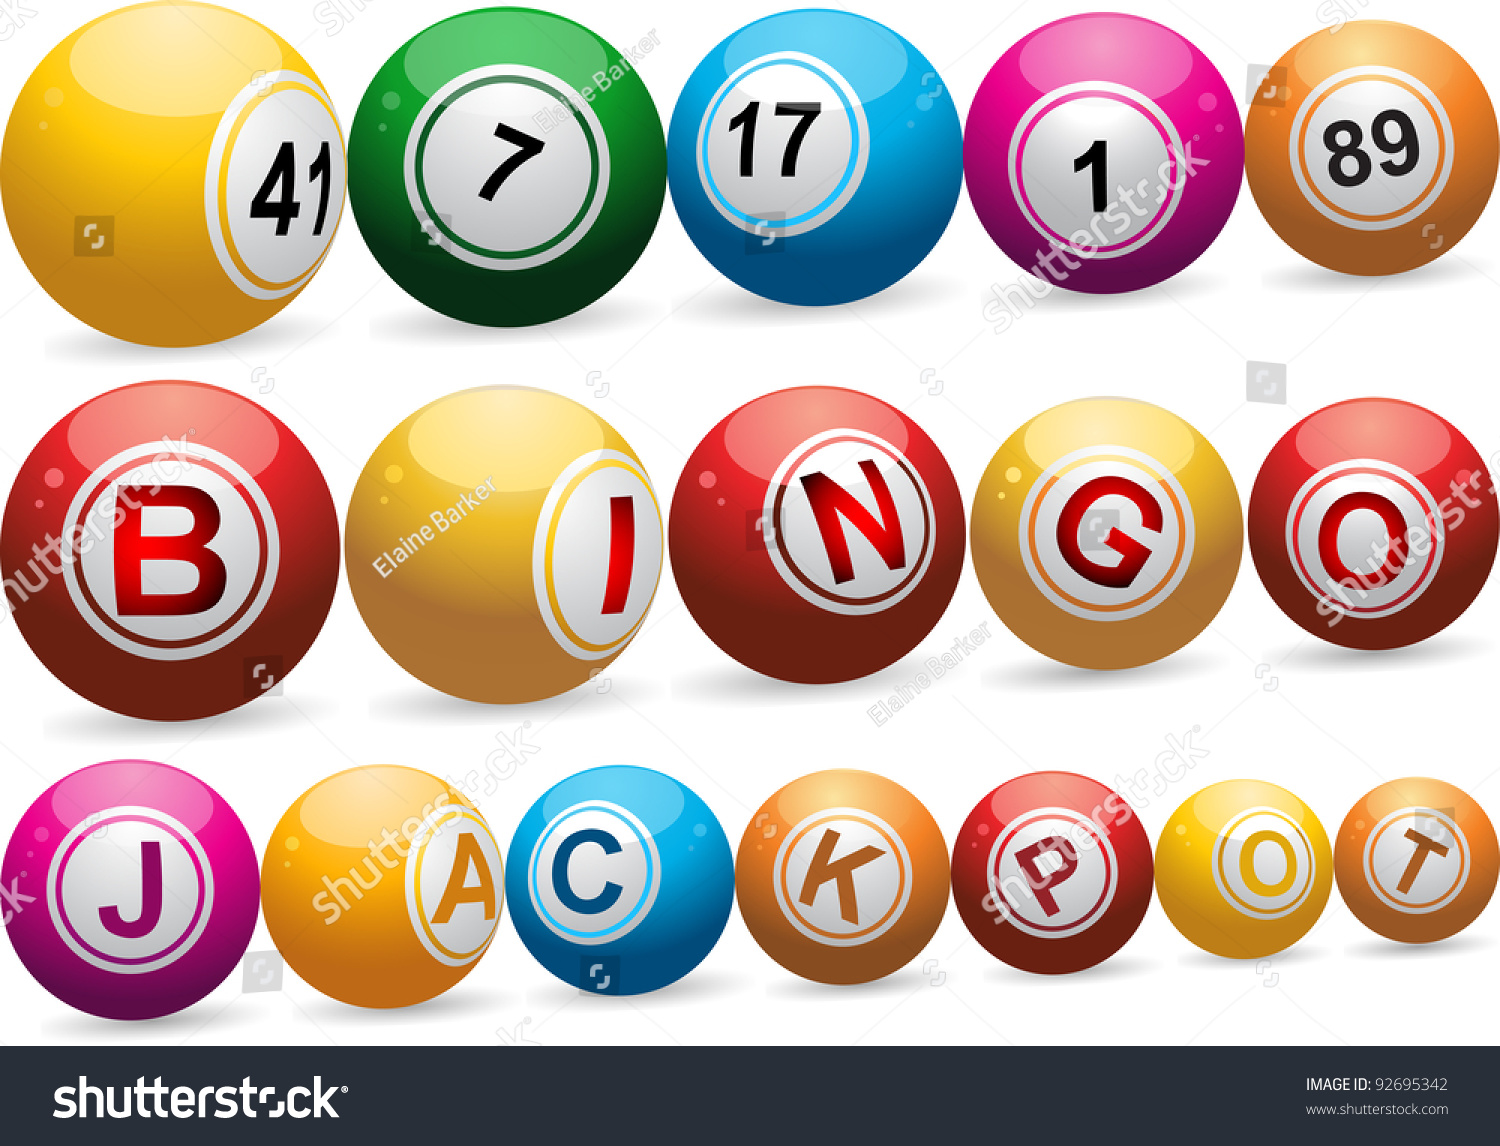 free clipart of bingo balls - photo #50